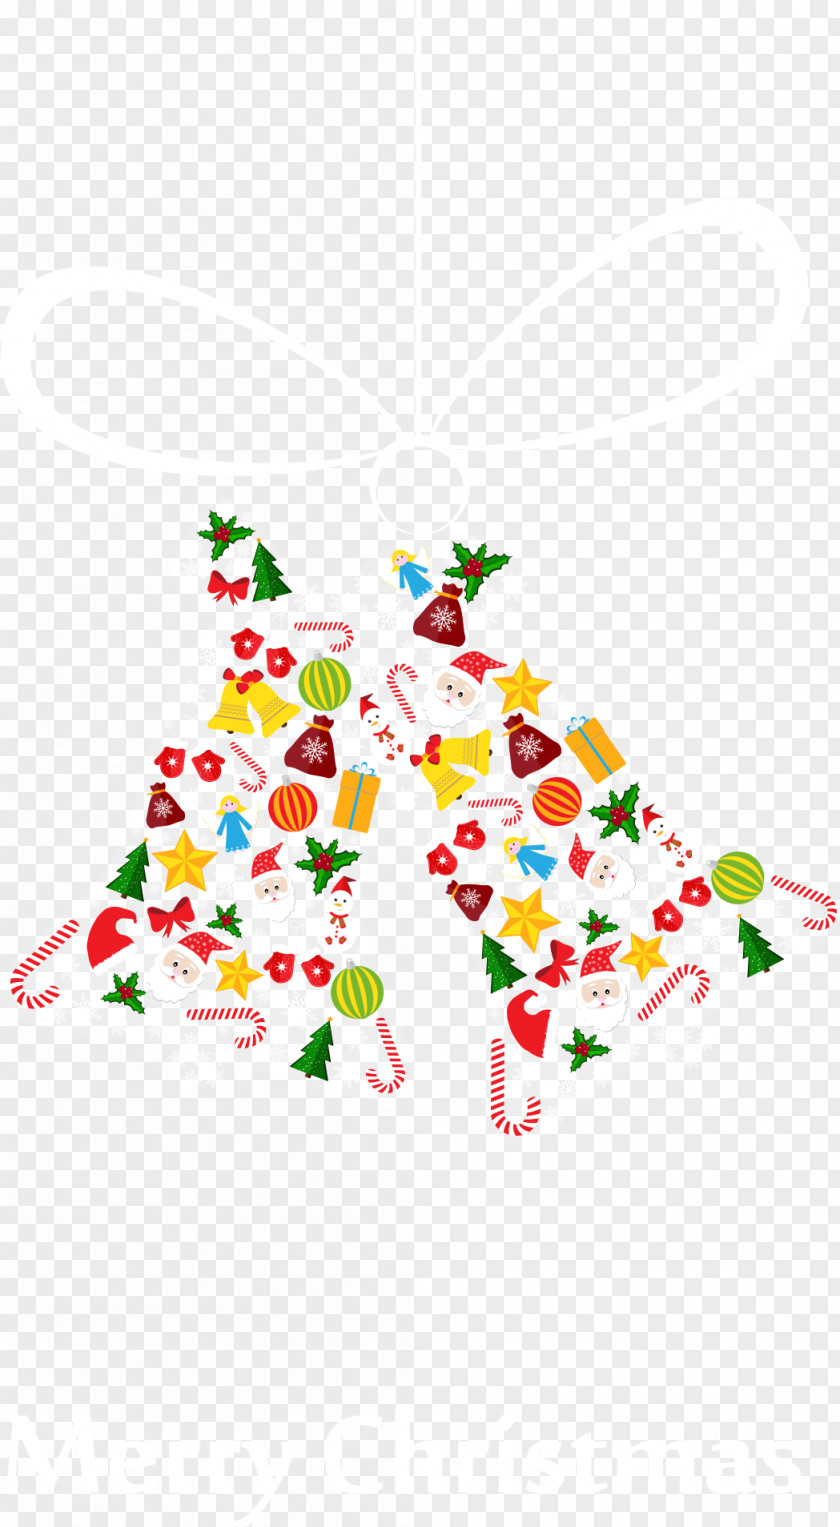 Cartoon Vector Christmas Bells Illustration PNG